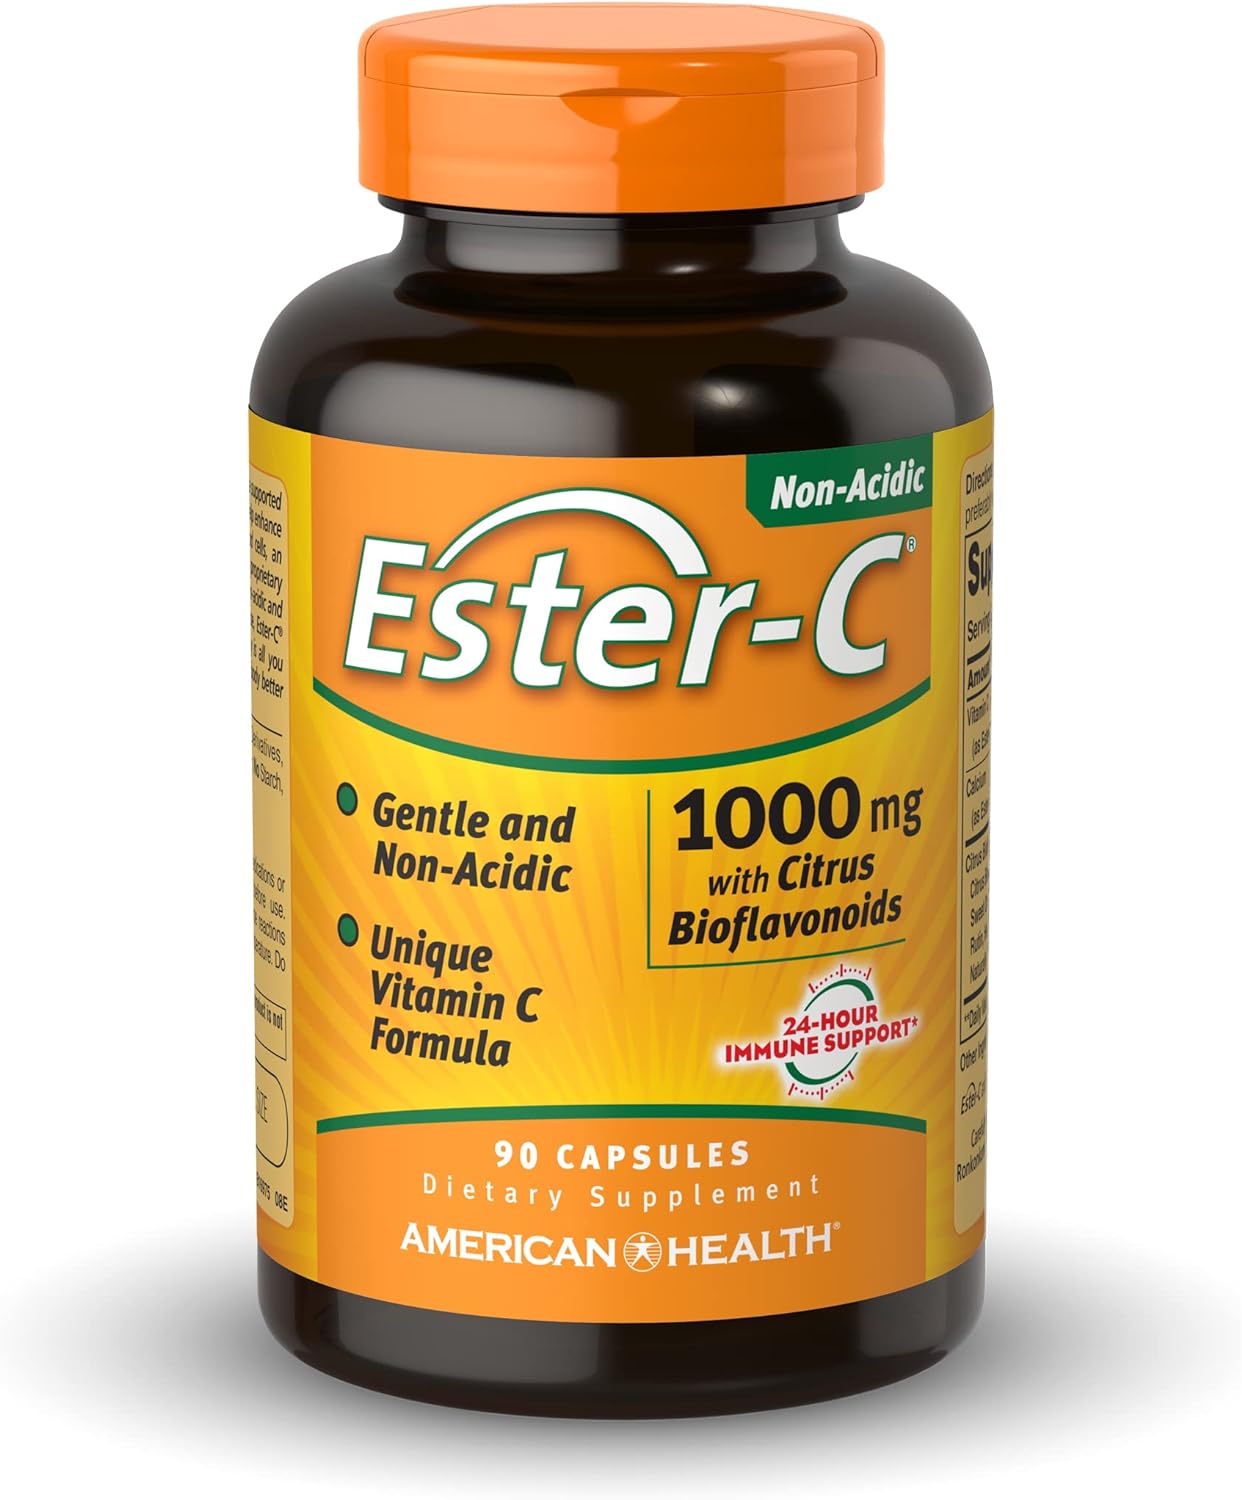 American Health - Ester-C with Citrus Bioflavonoids - 1000 mg. 90 Caps